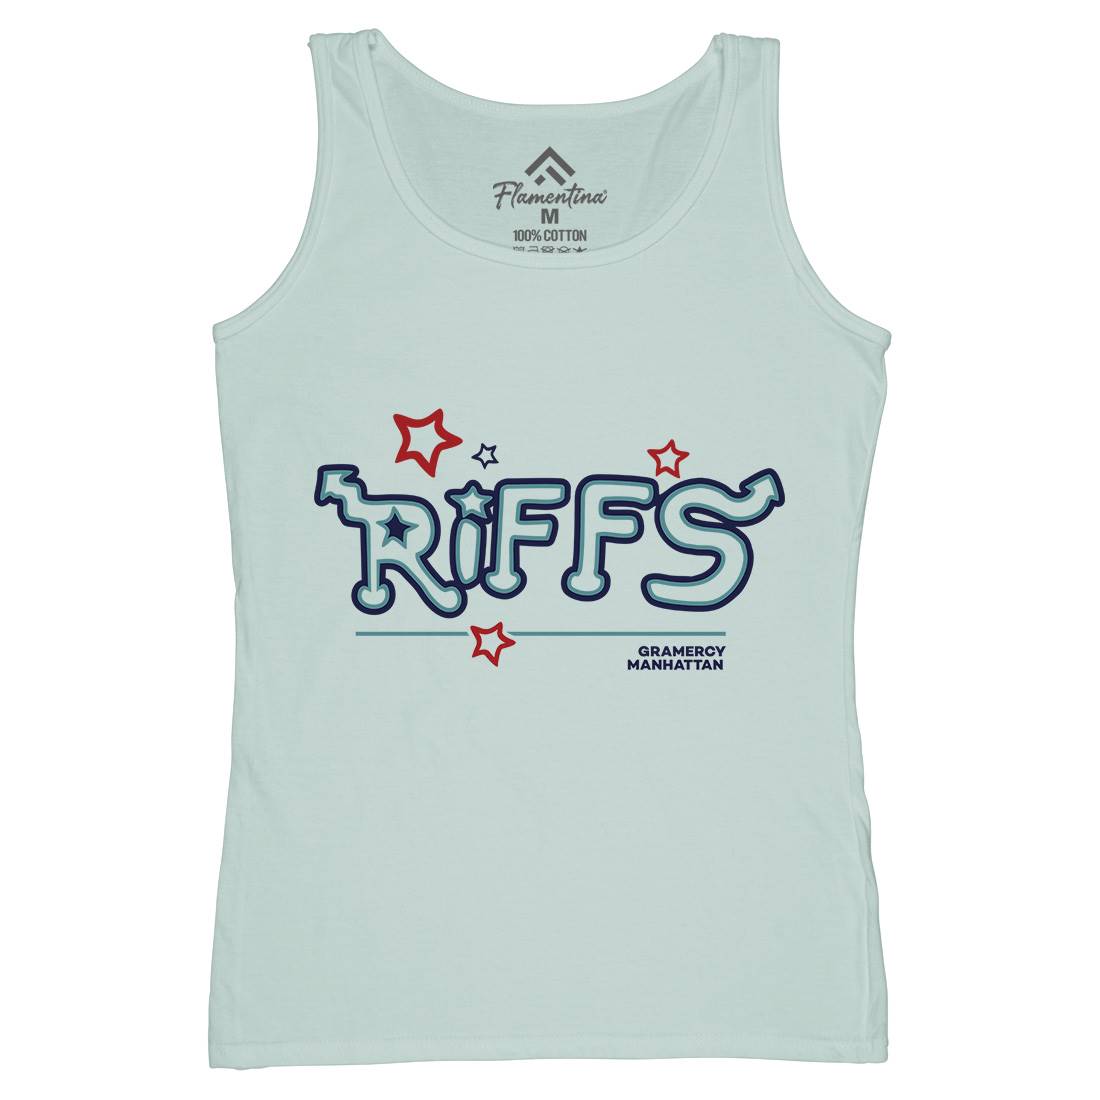 Riffs Womens Organic Tank Top Vest Retro D290